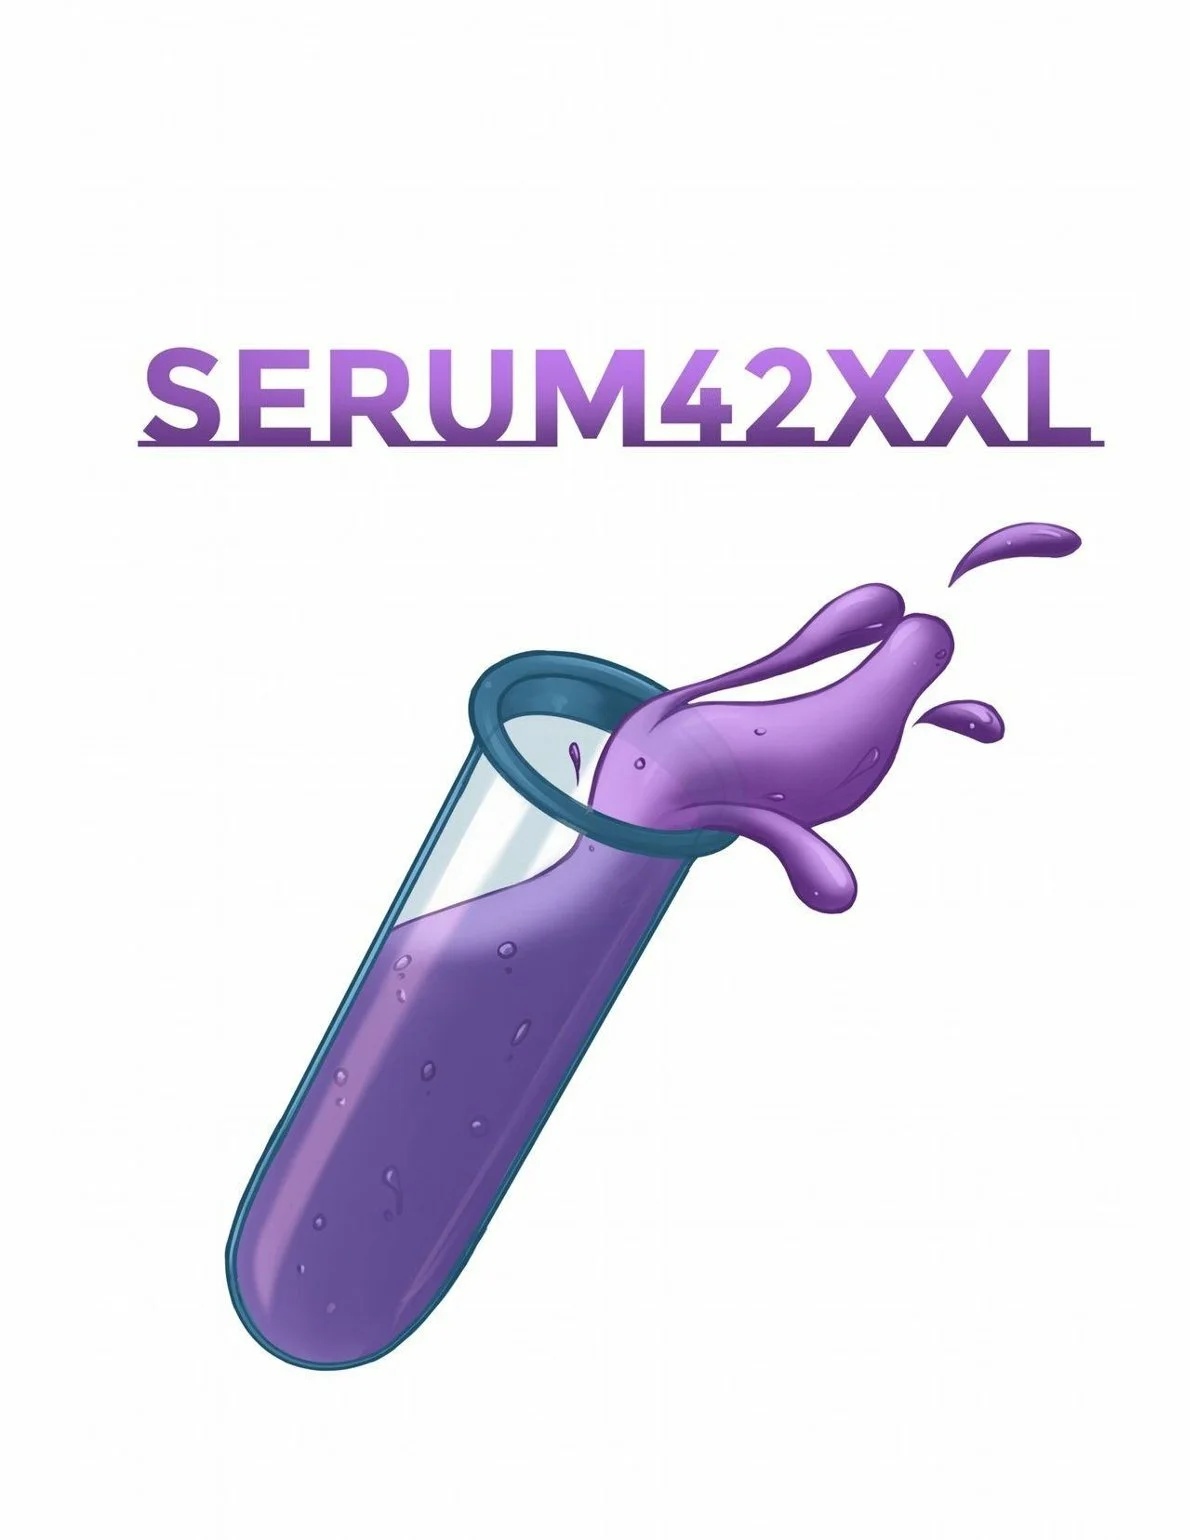 Serum42XXL (completo) - 107